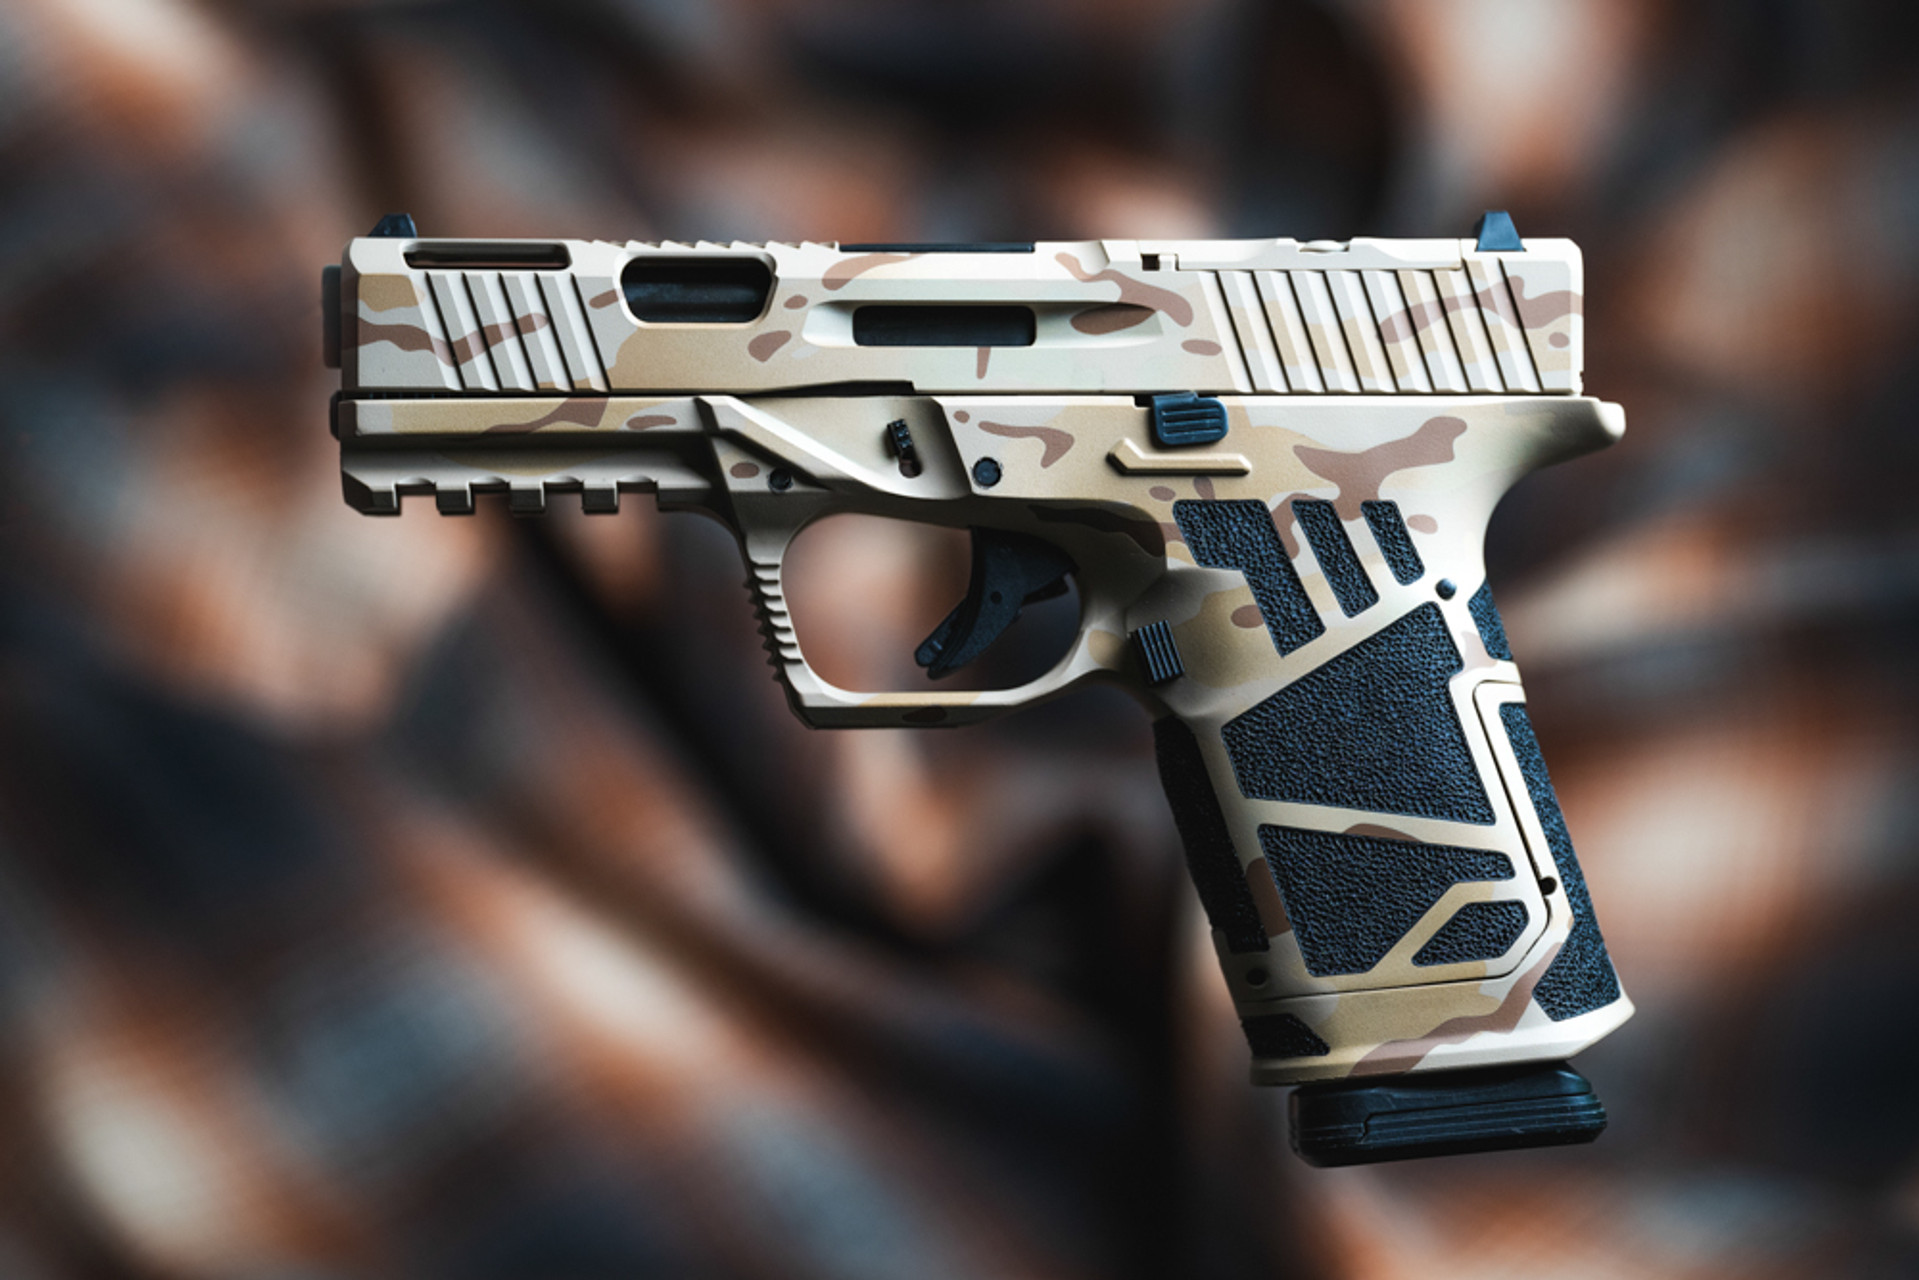 glock 19 custom